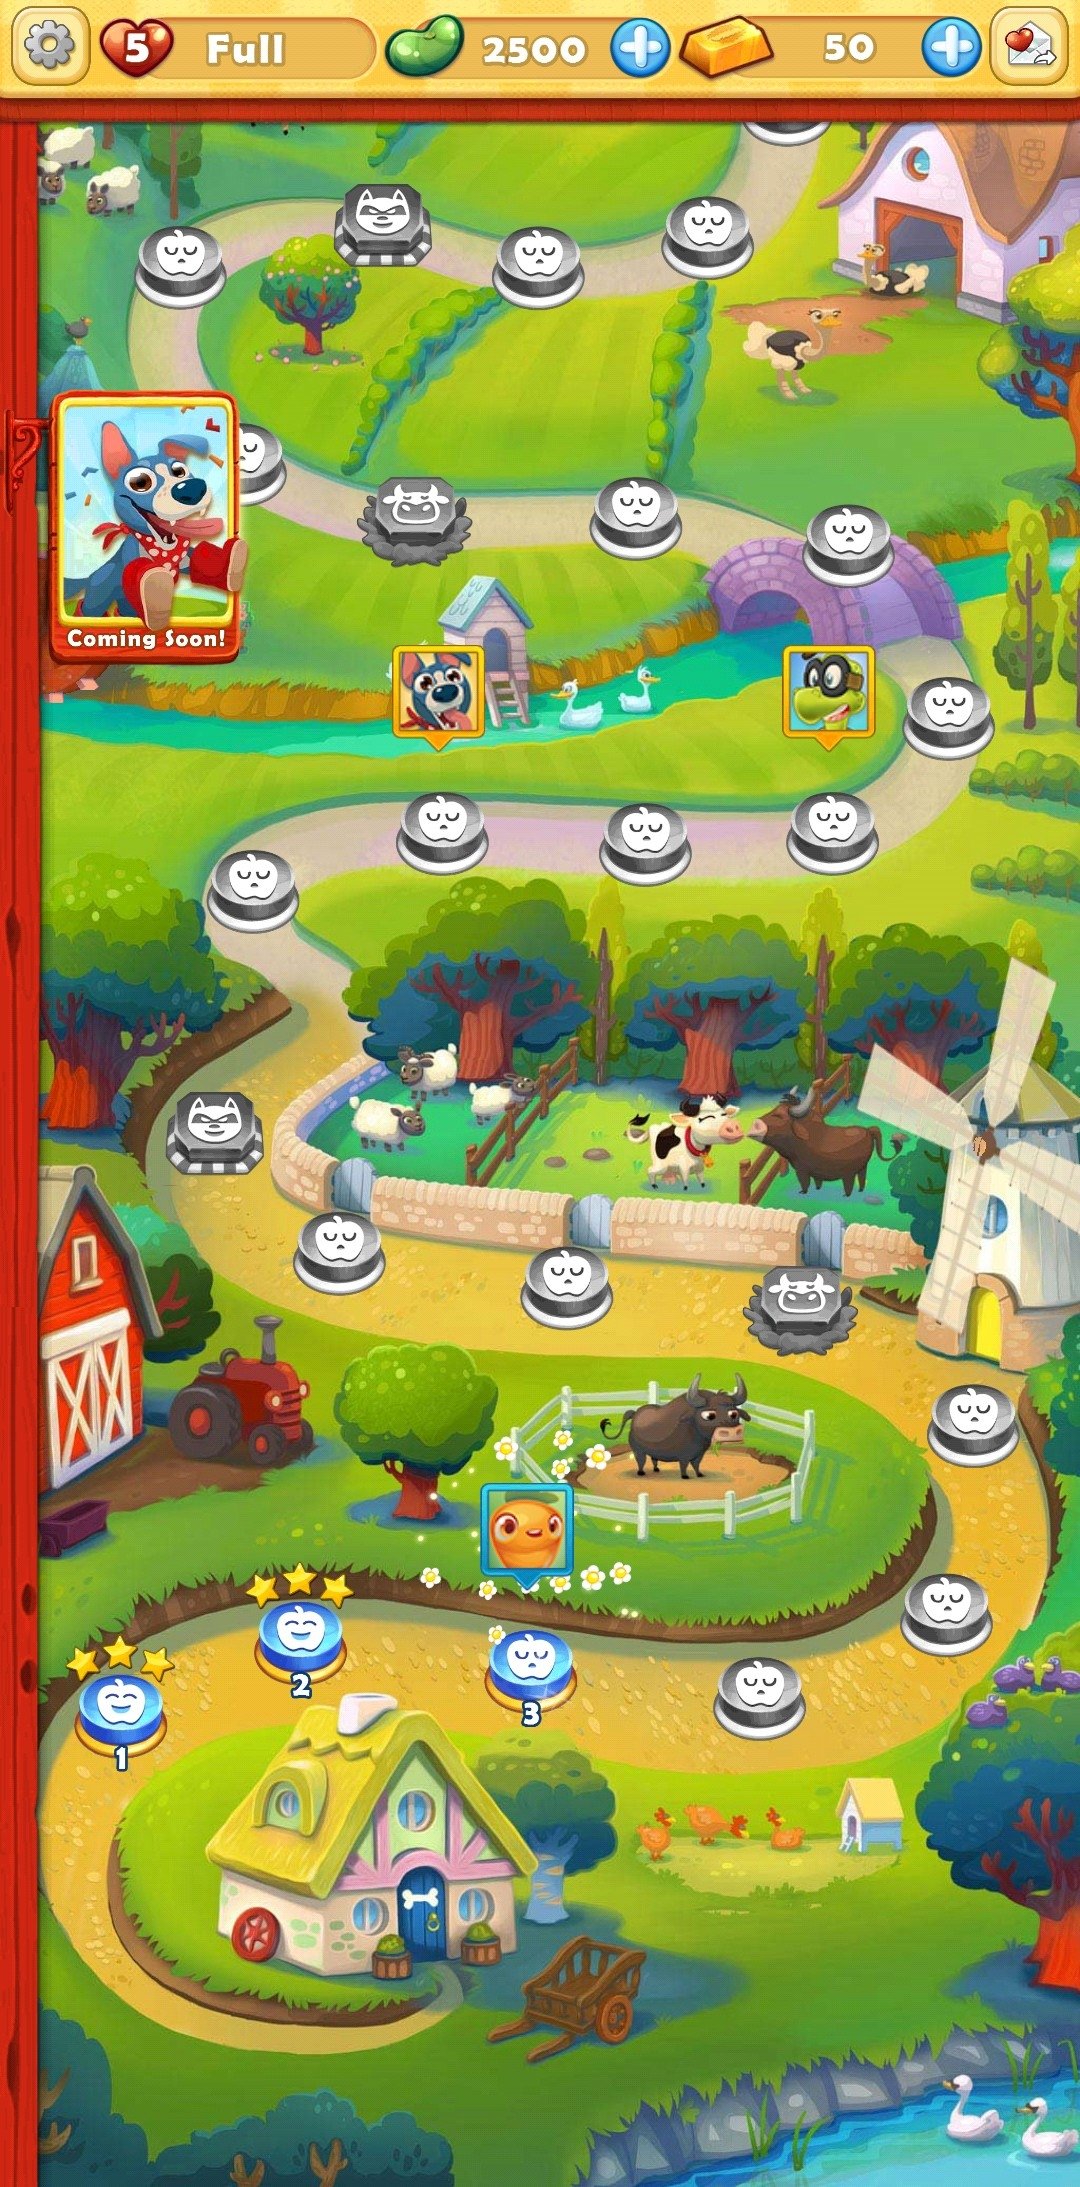 Farm Heroes Saga instal the new version for ipod